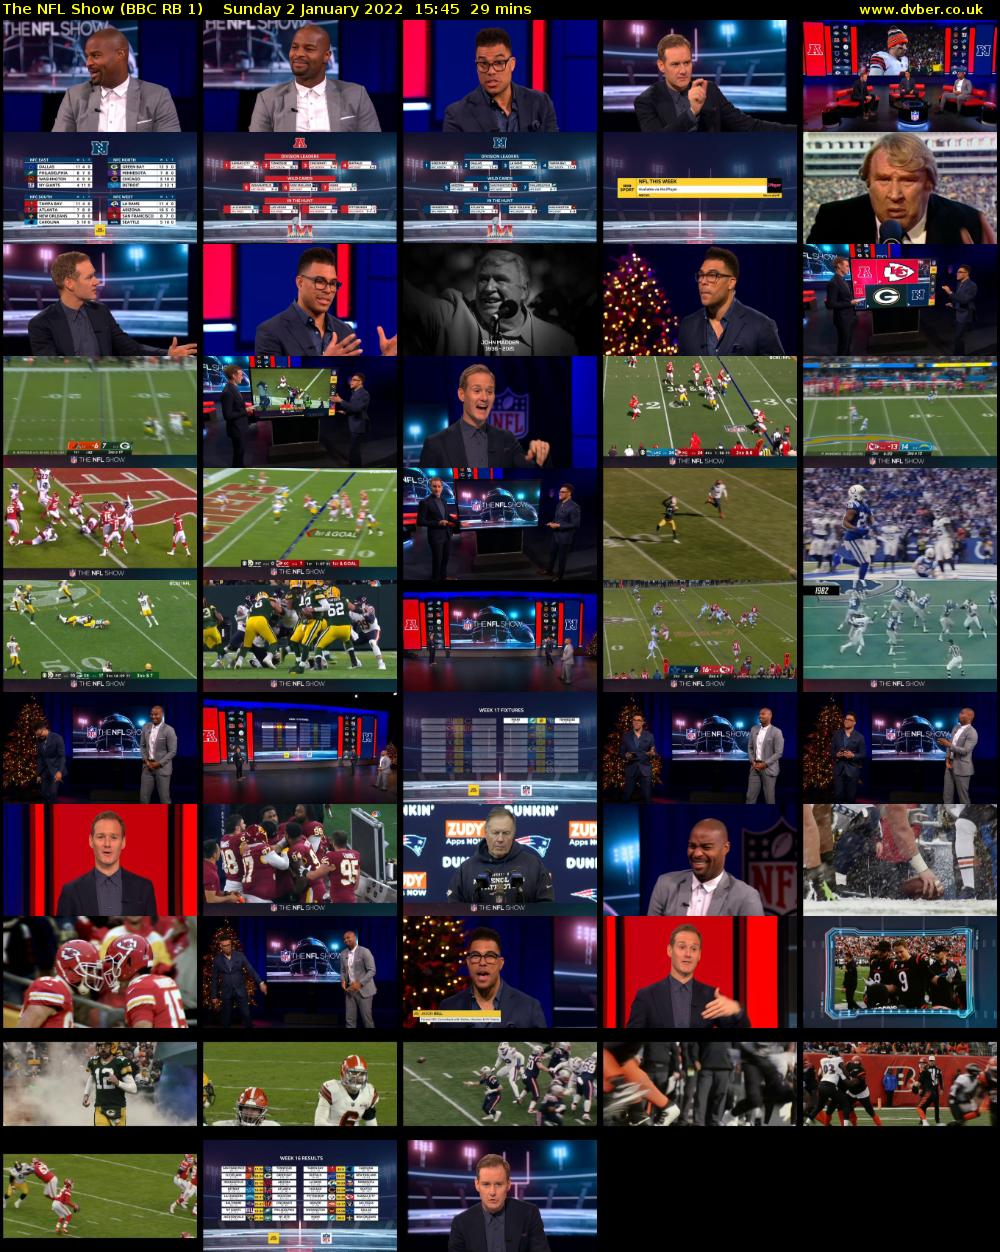 The NFL Show (BBC RB 1) Sunday 2 January 2022 15:45 - 16:14